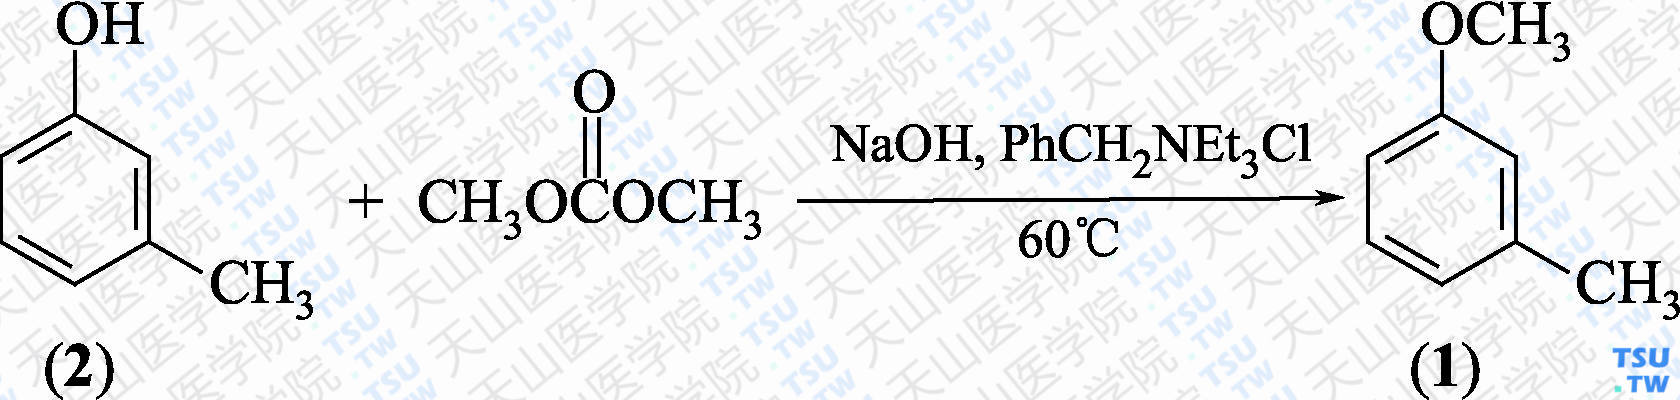 间甲基茴香醚（分子式：C<sub>8</sub>H<sub>10</sub>O）的合成方法路线及其结构式